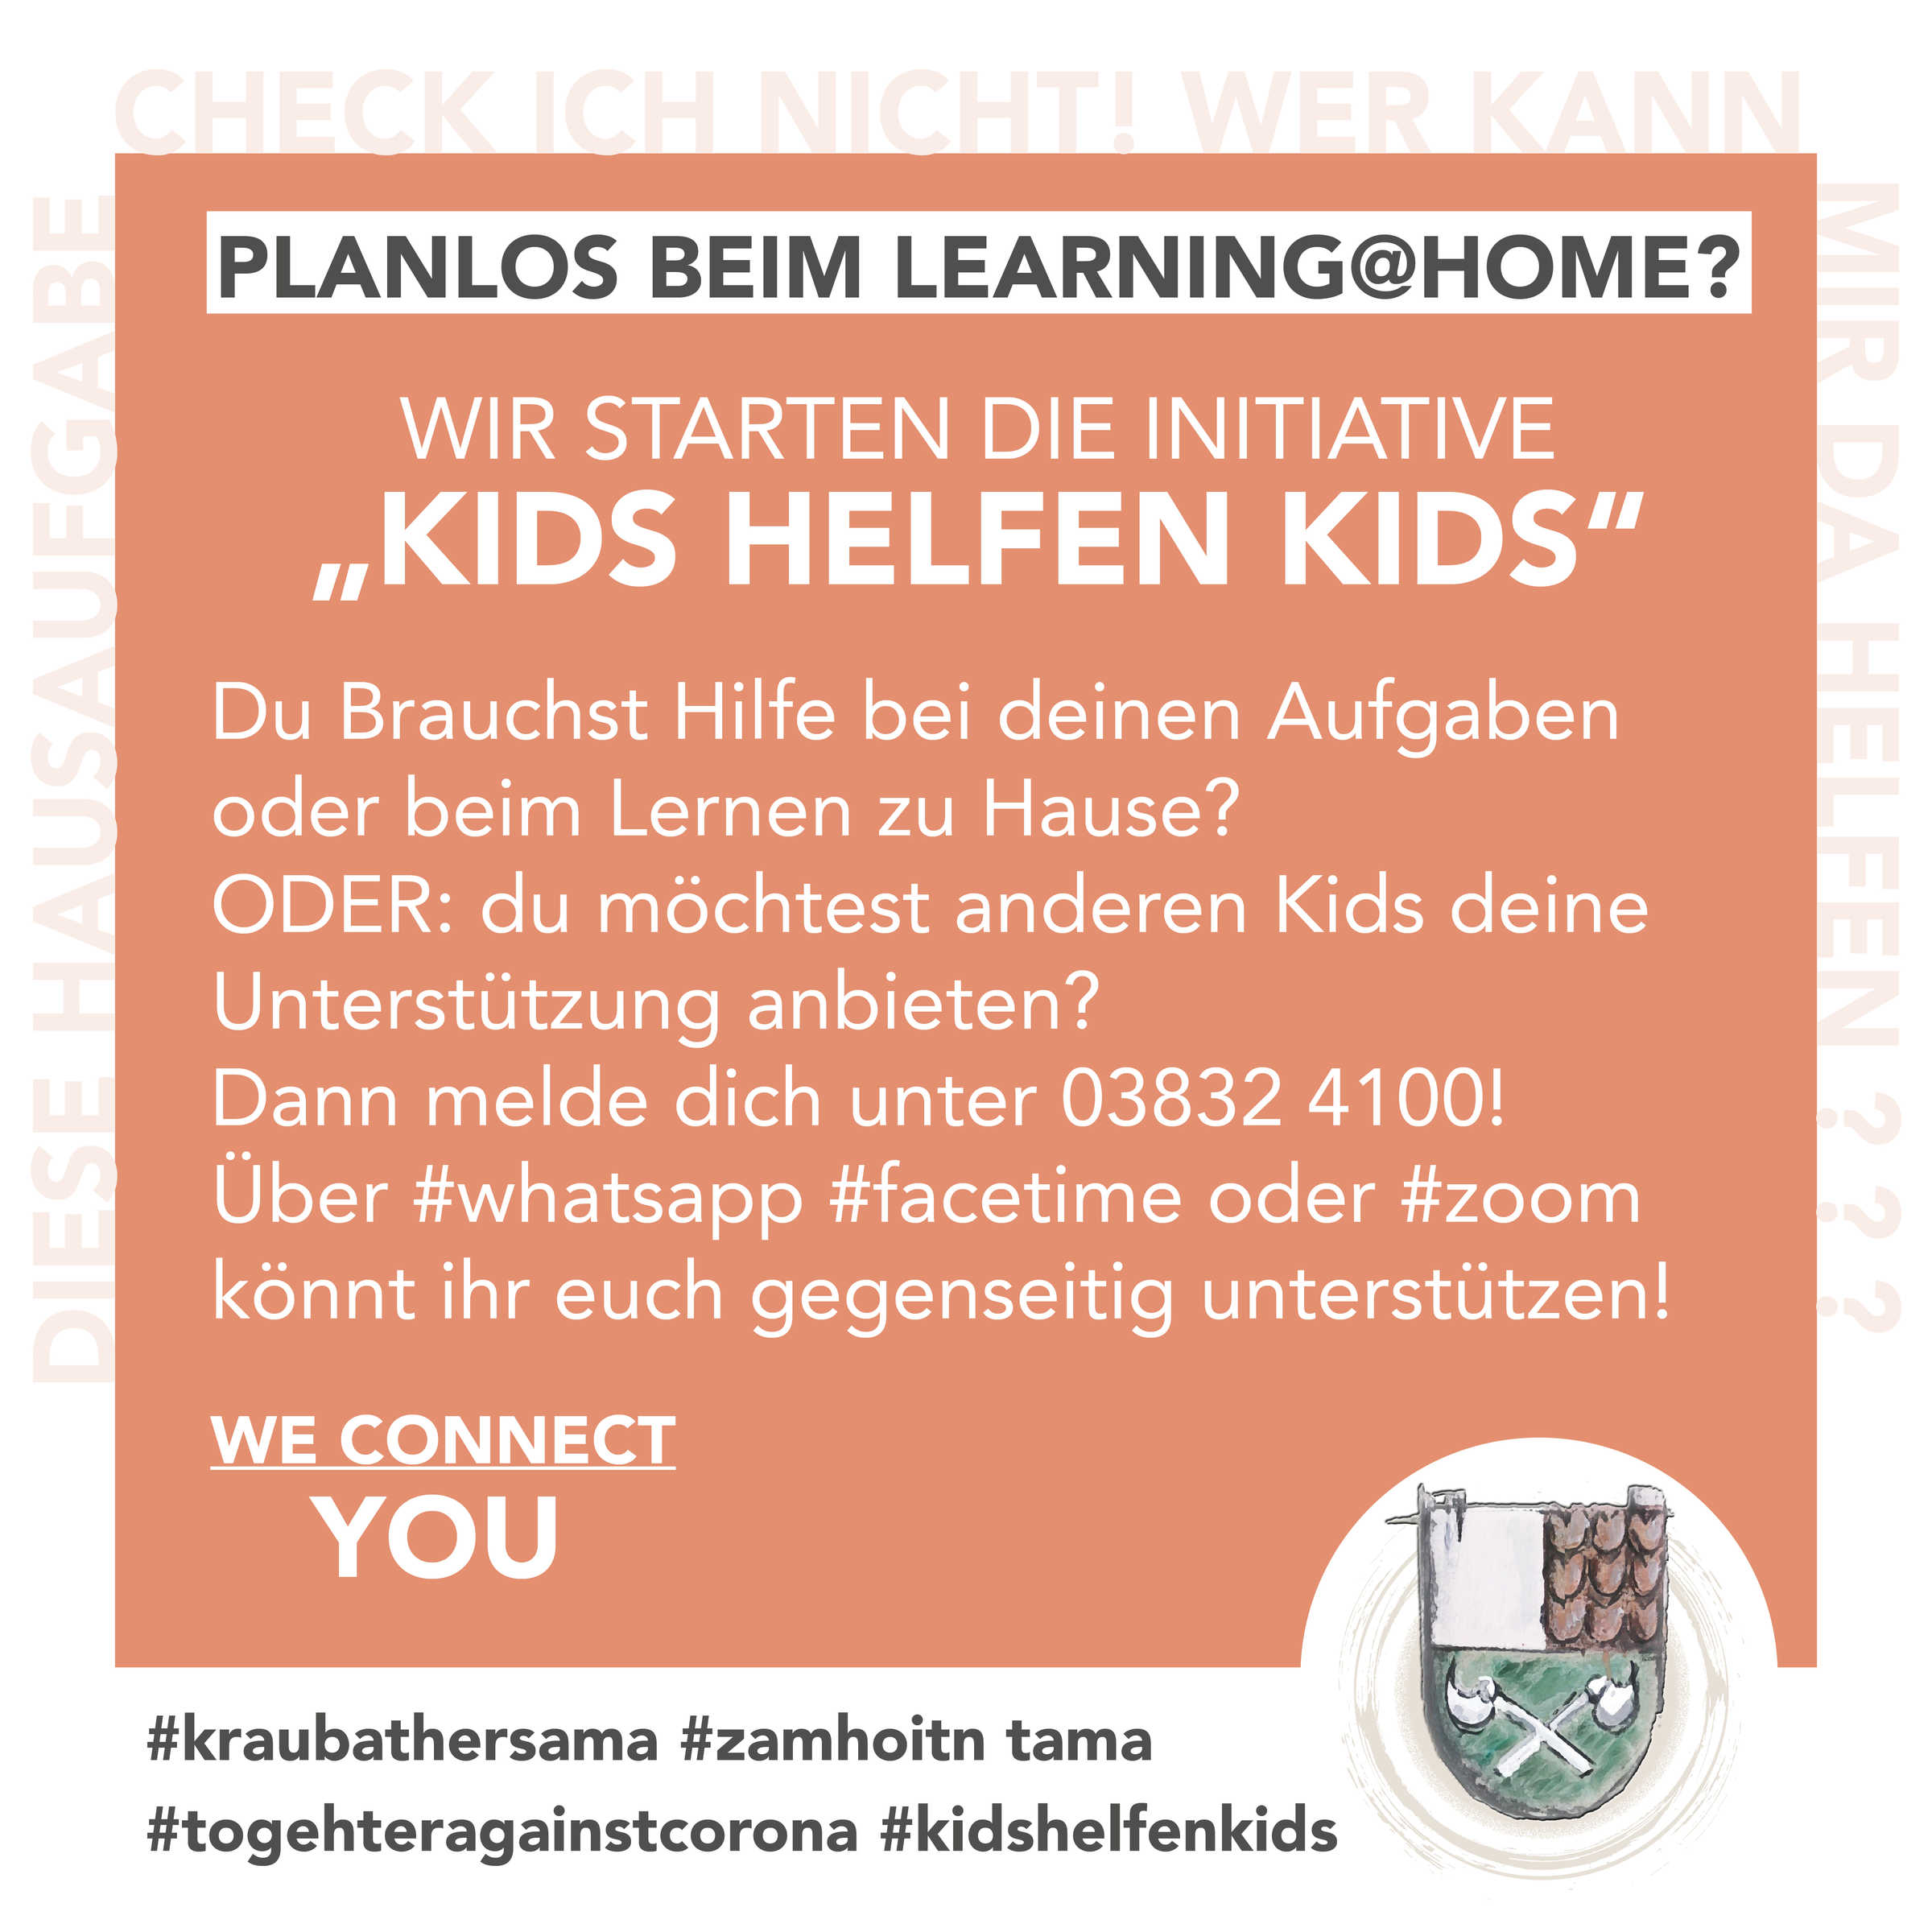 learninghome initiative-kidshelfenkids facebook 200414 web